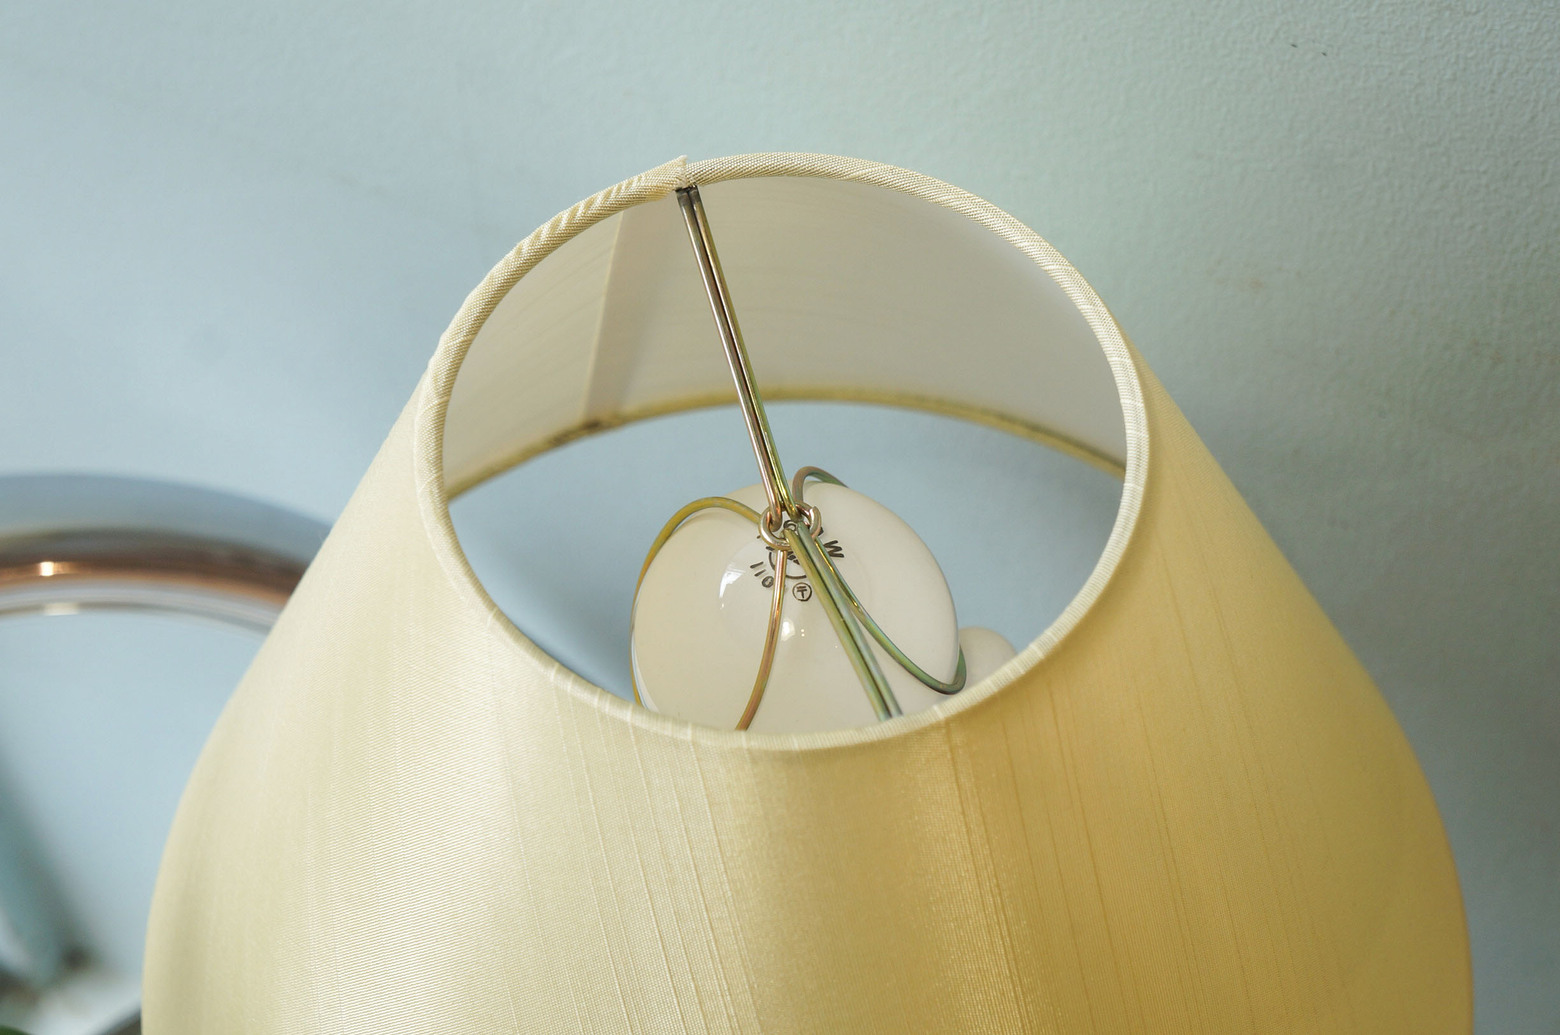 Natural Wooden Table Lamp/木製テーブルランプ 照明 ナチュラル インテリア シャビーシック